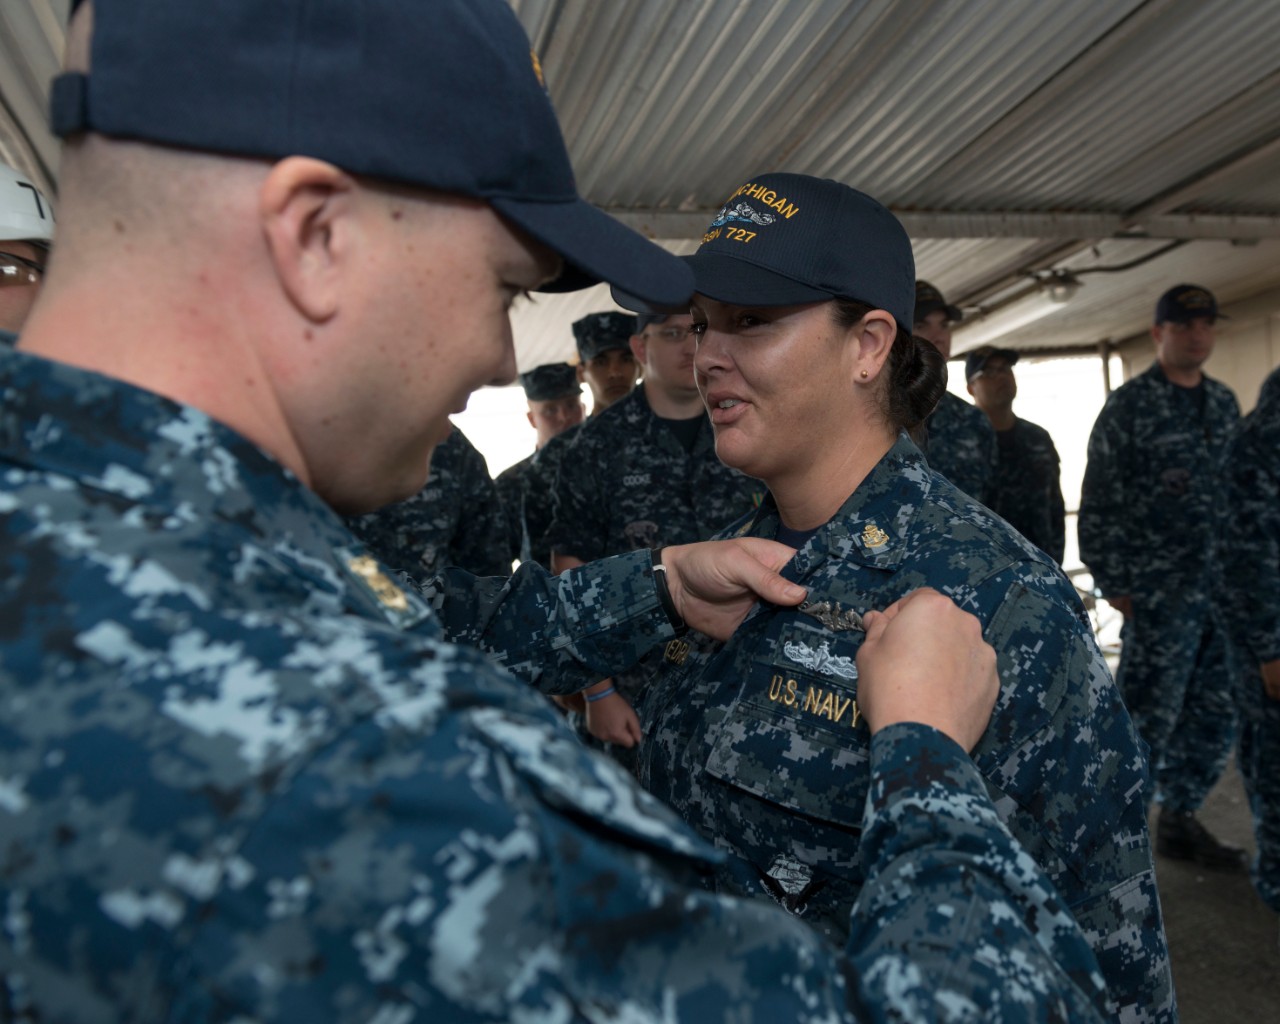 A male sailor pins the submarine warfare pin on a female sailor's uniform.